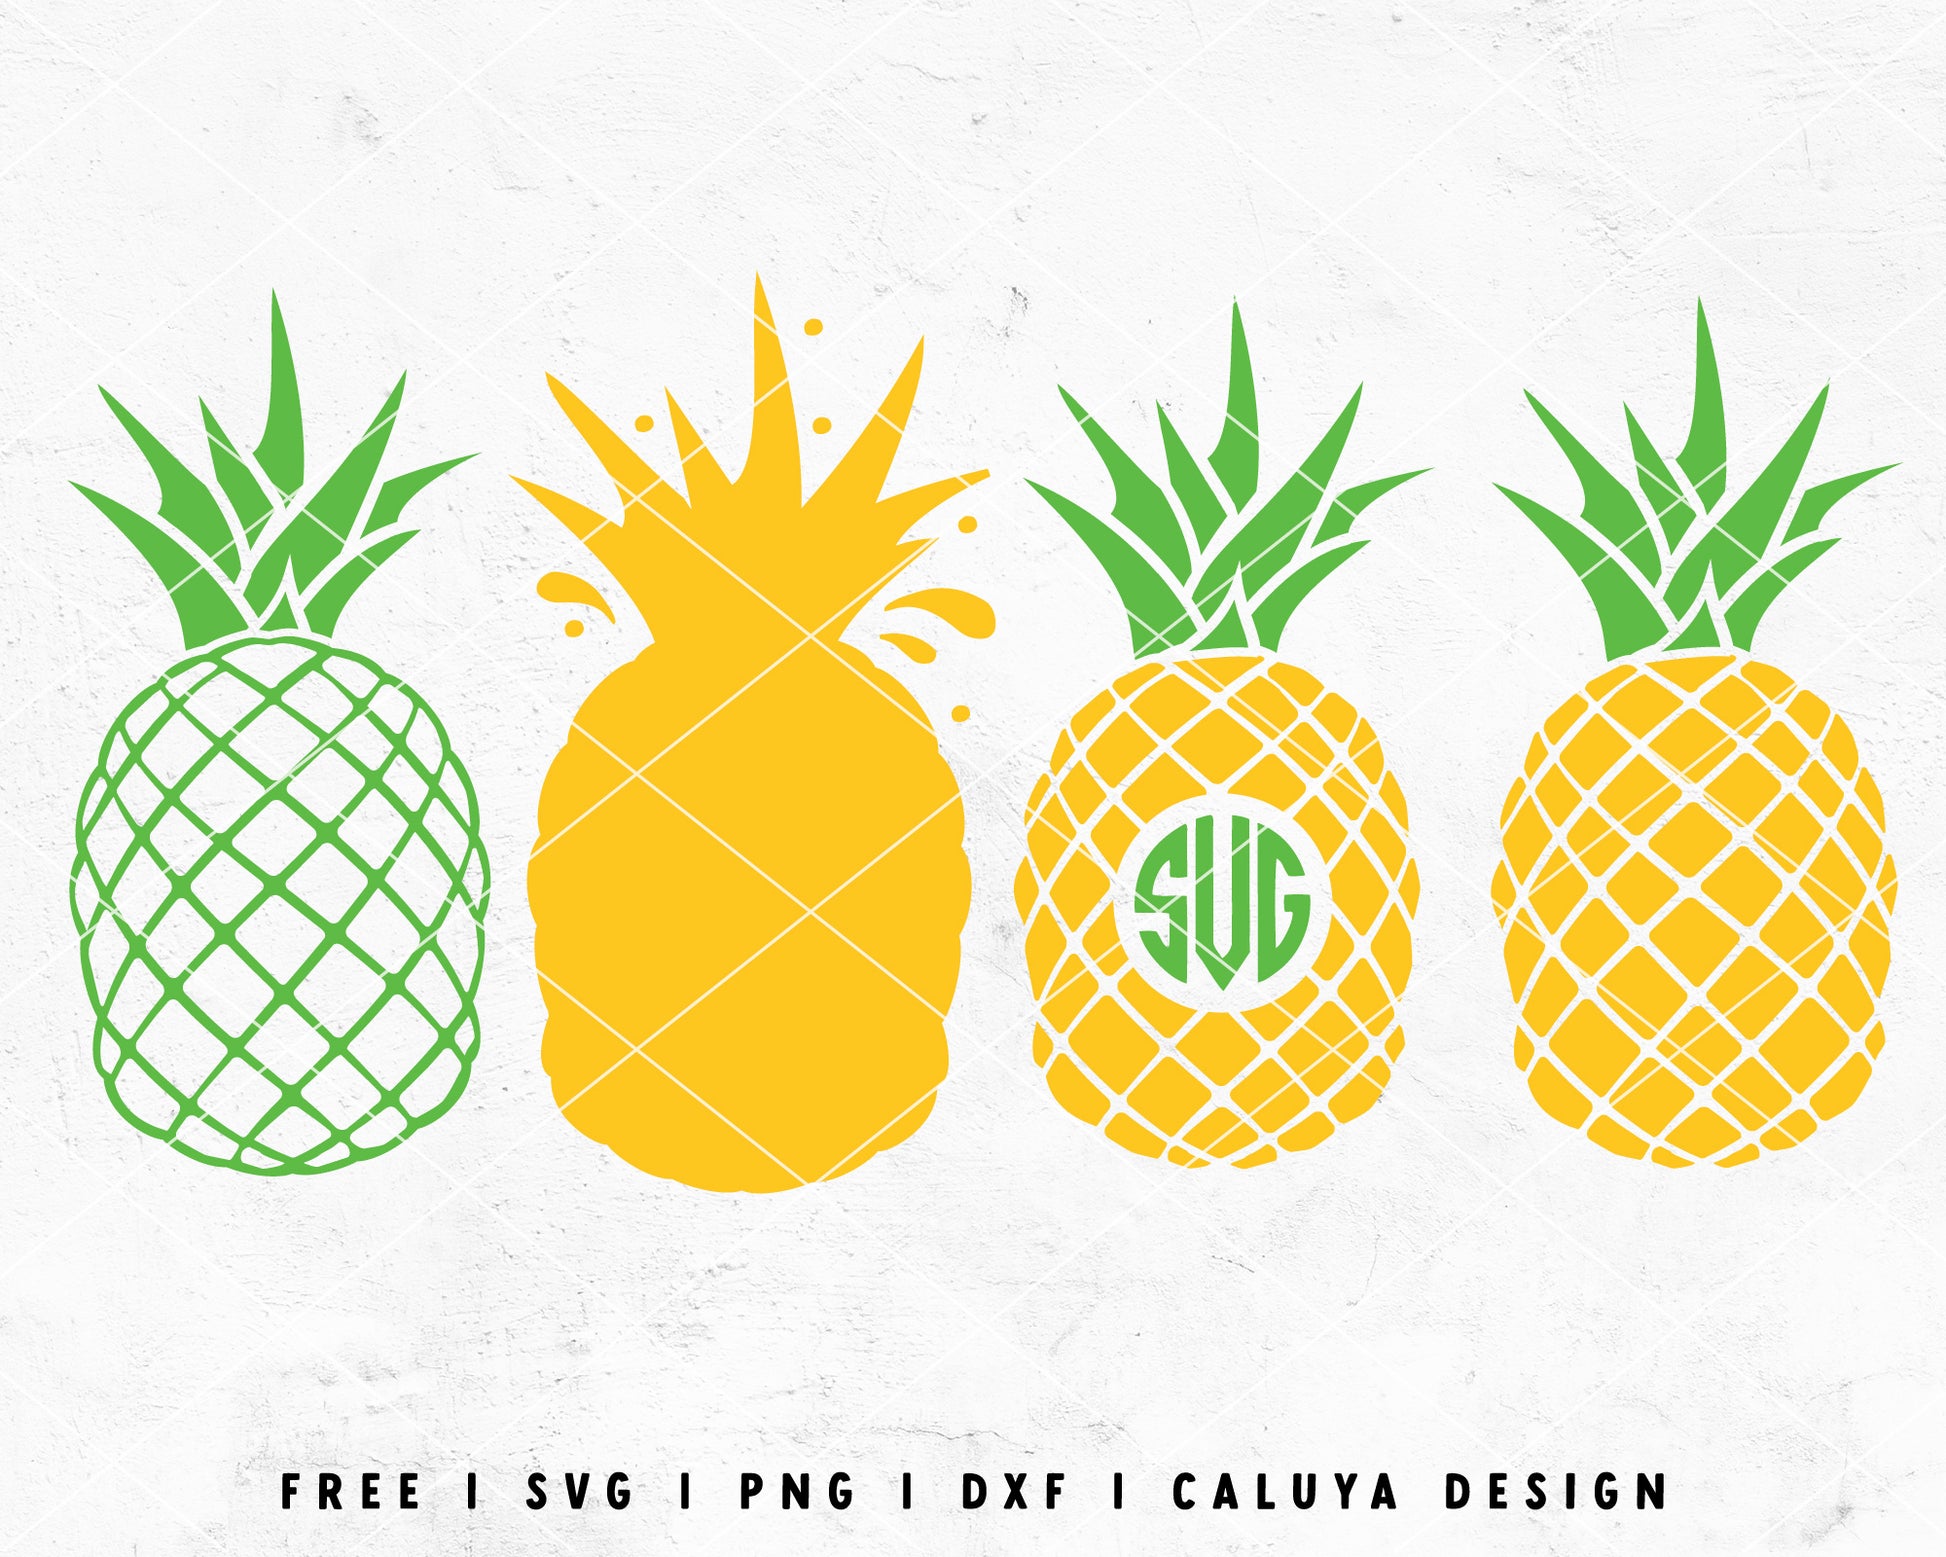 FREE Pineapple SVG | Monogram SVG Cut File for Cricut, Cameo Silhouette | Free SVG Cut File